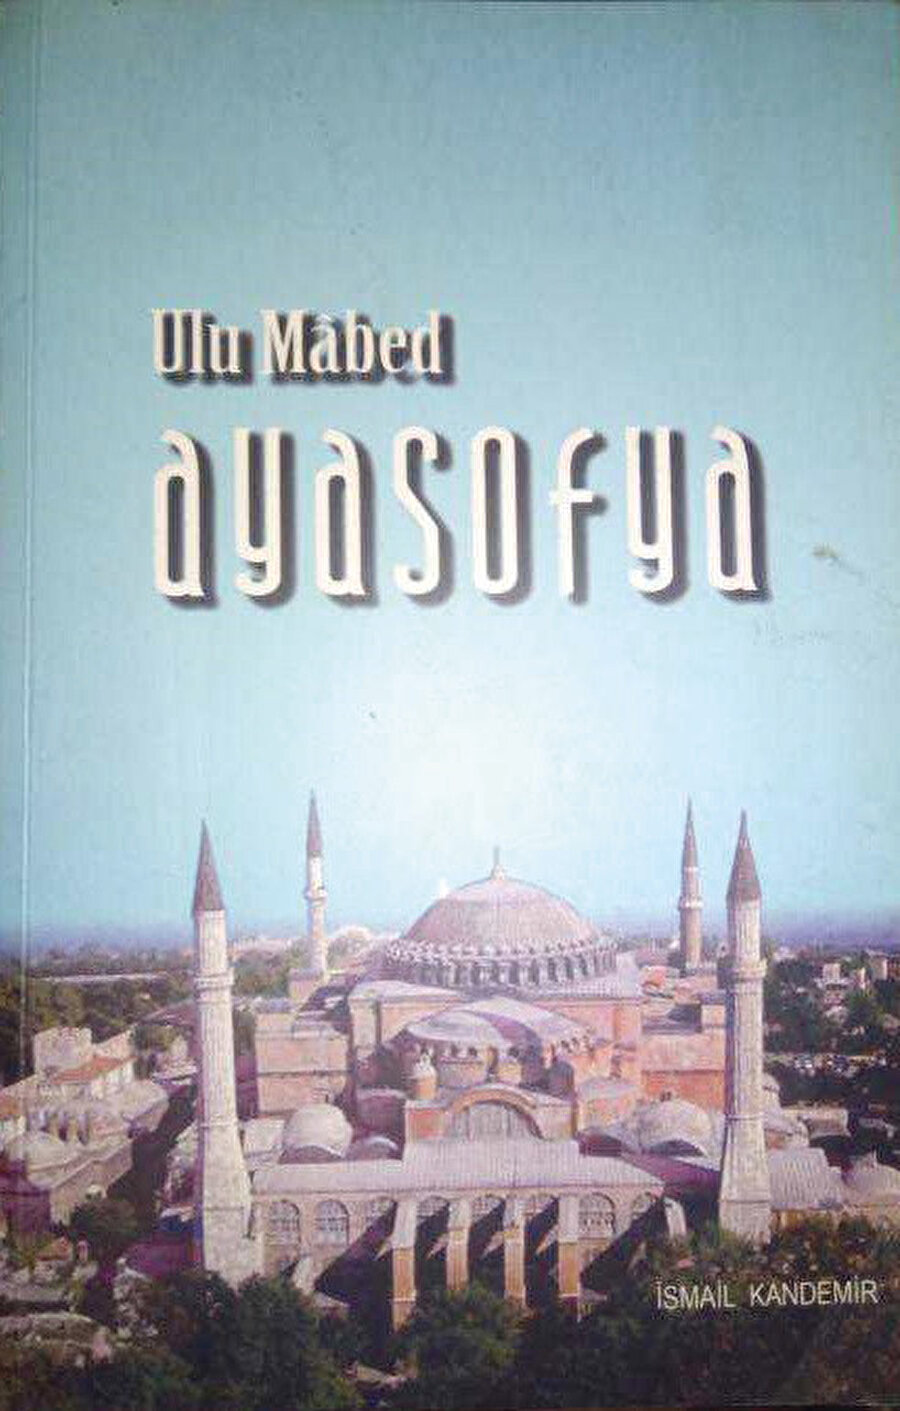 İsmail Kandemir'in Ulu Mâbed Ayasofya kitabı